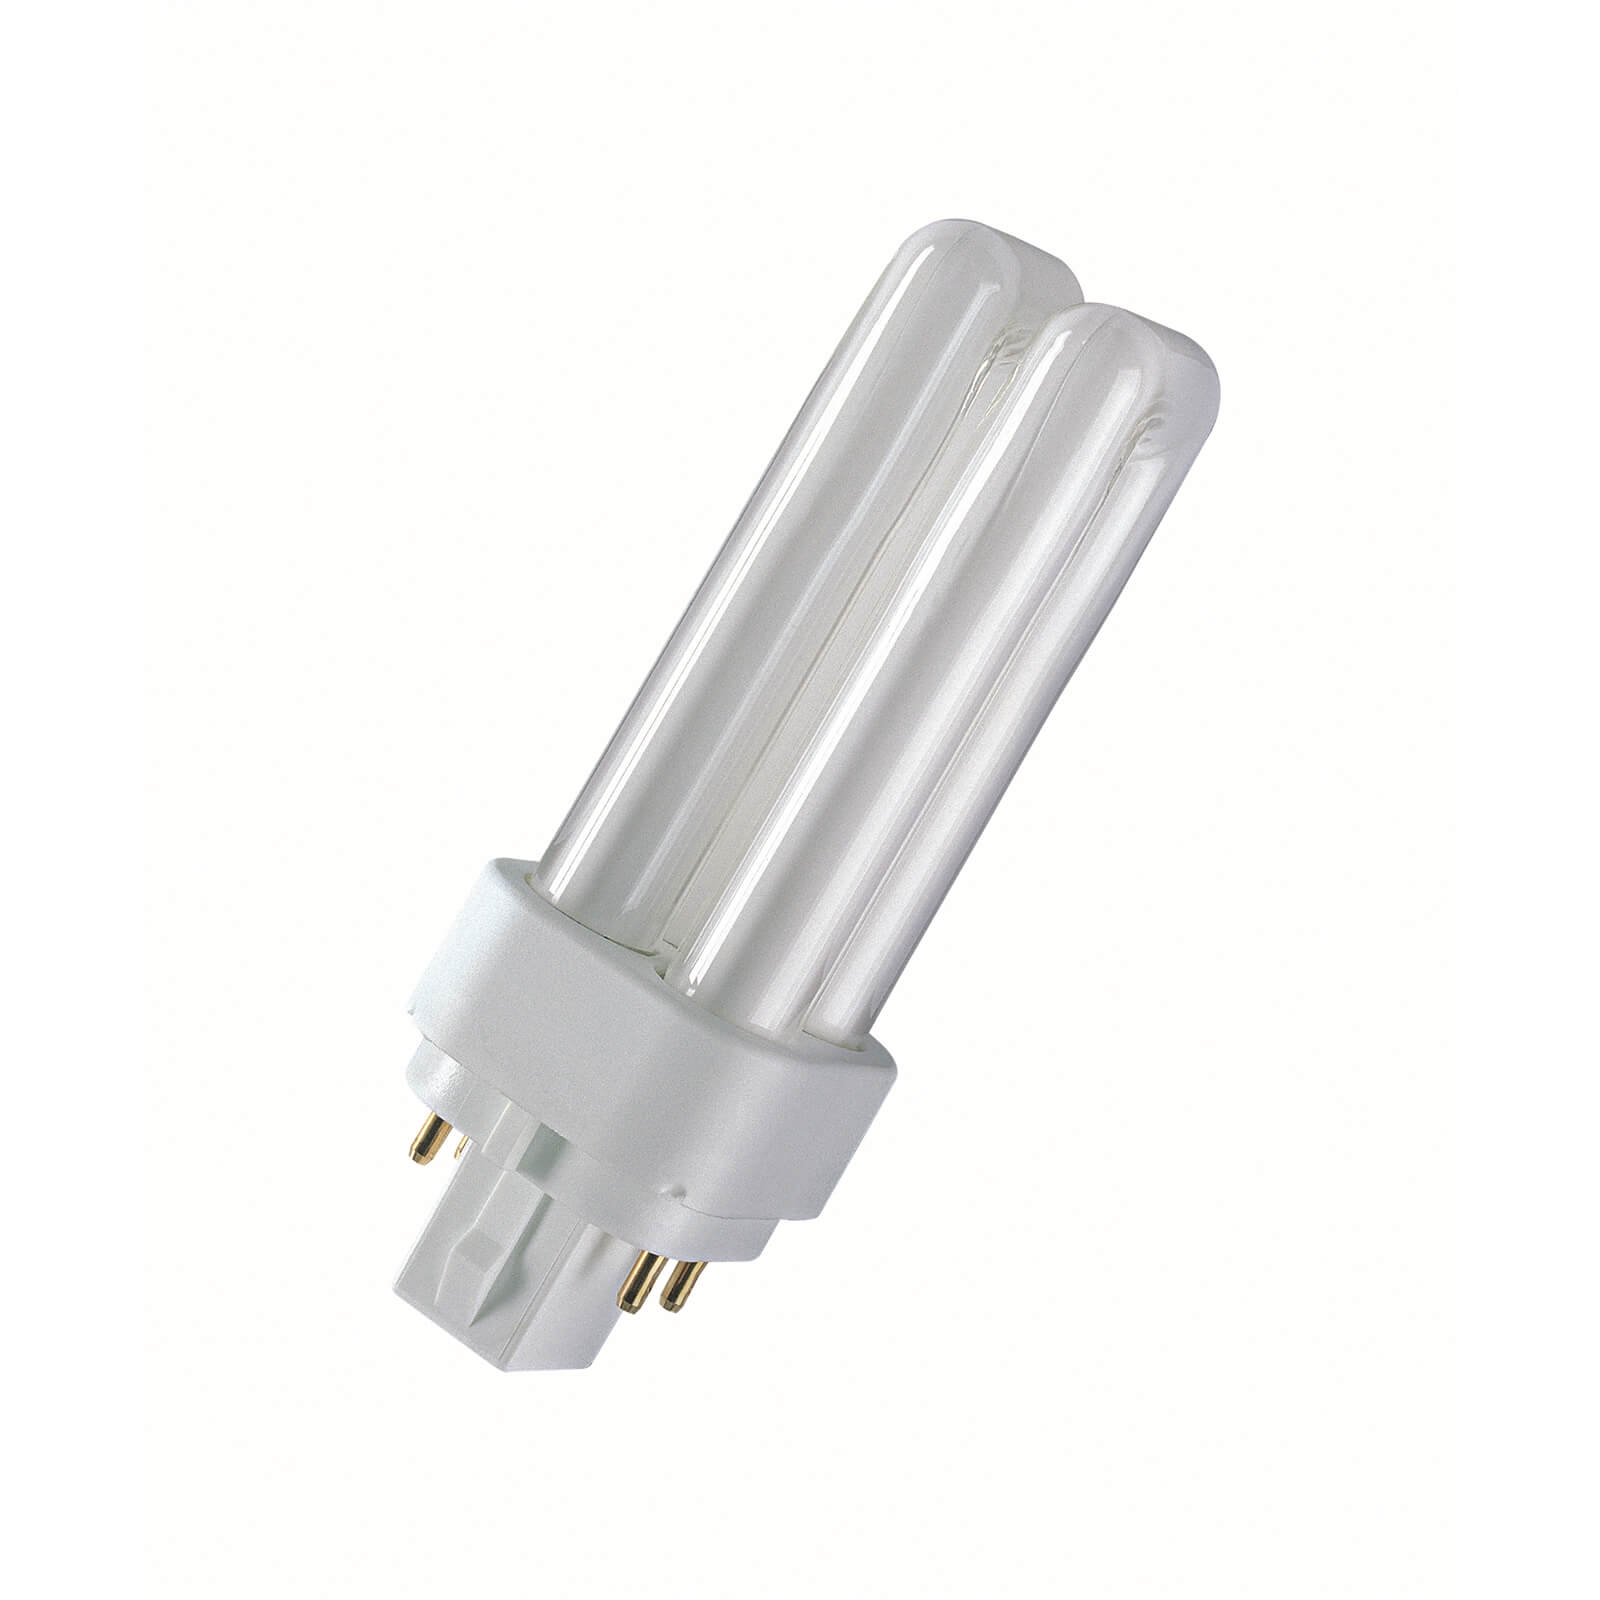 Osram CFL Dulux 4 pin 18W Light Bulb